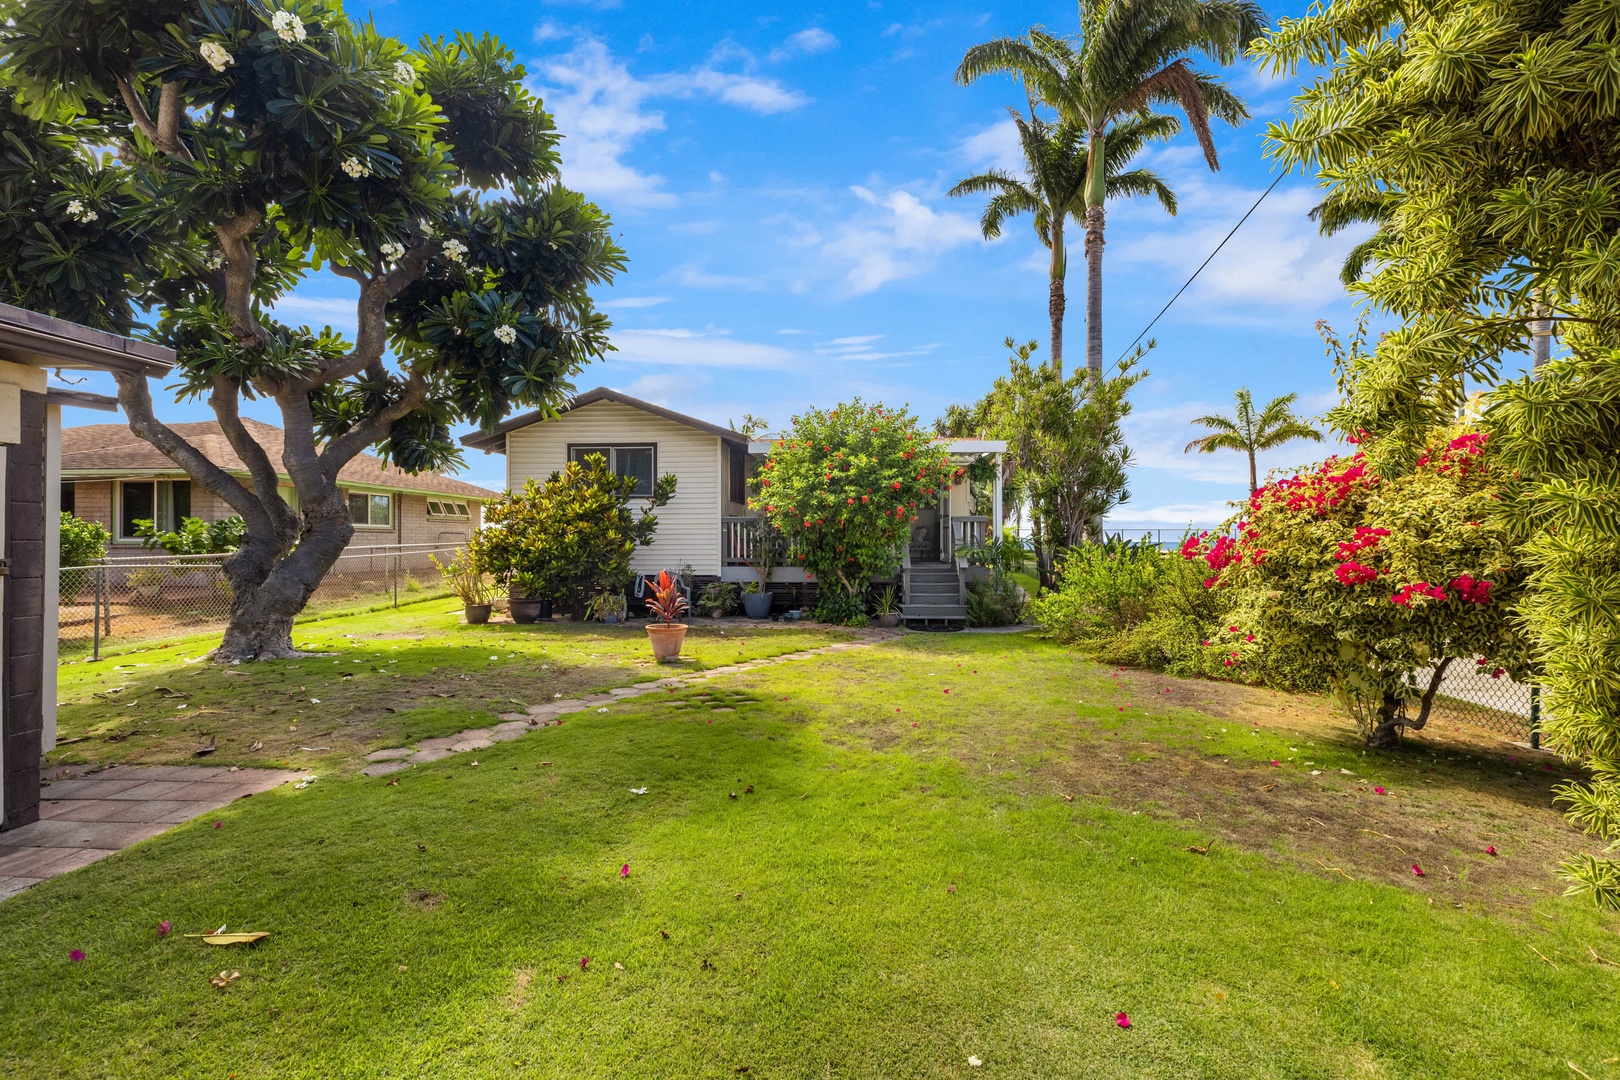 Ewa Beach Vacation Rentals, Ewa Beachfront Cottage - Your Hawaiian getaway home with perfectly manicured garden yard.